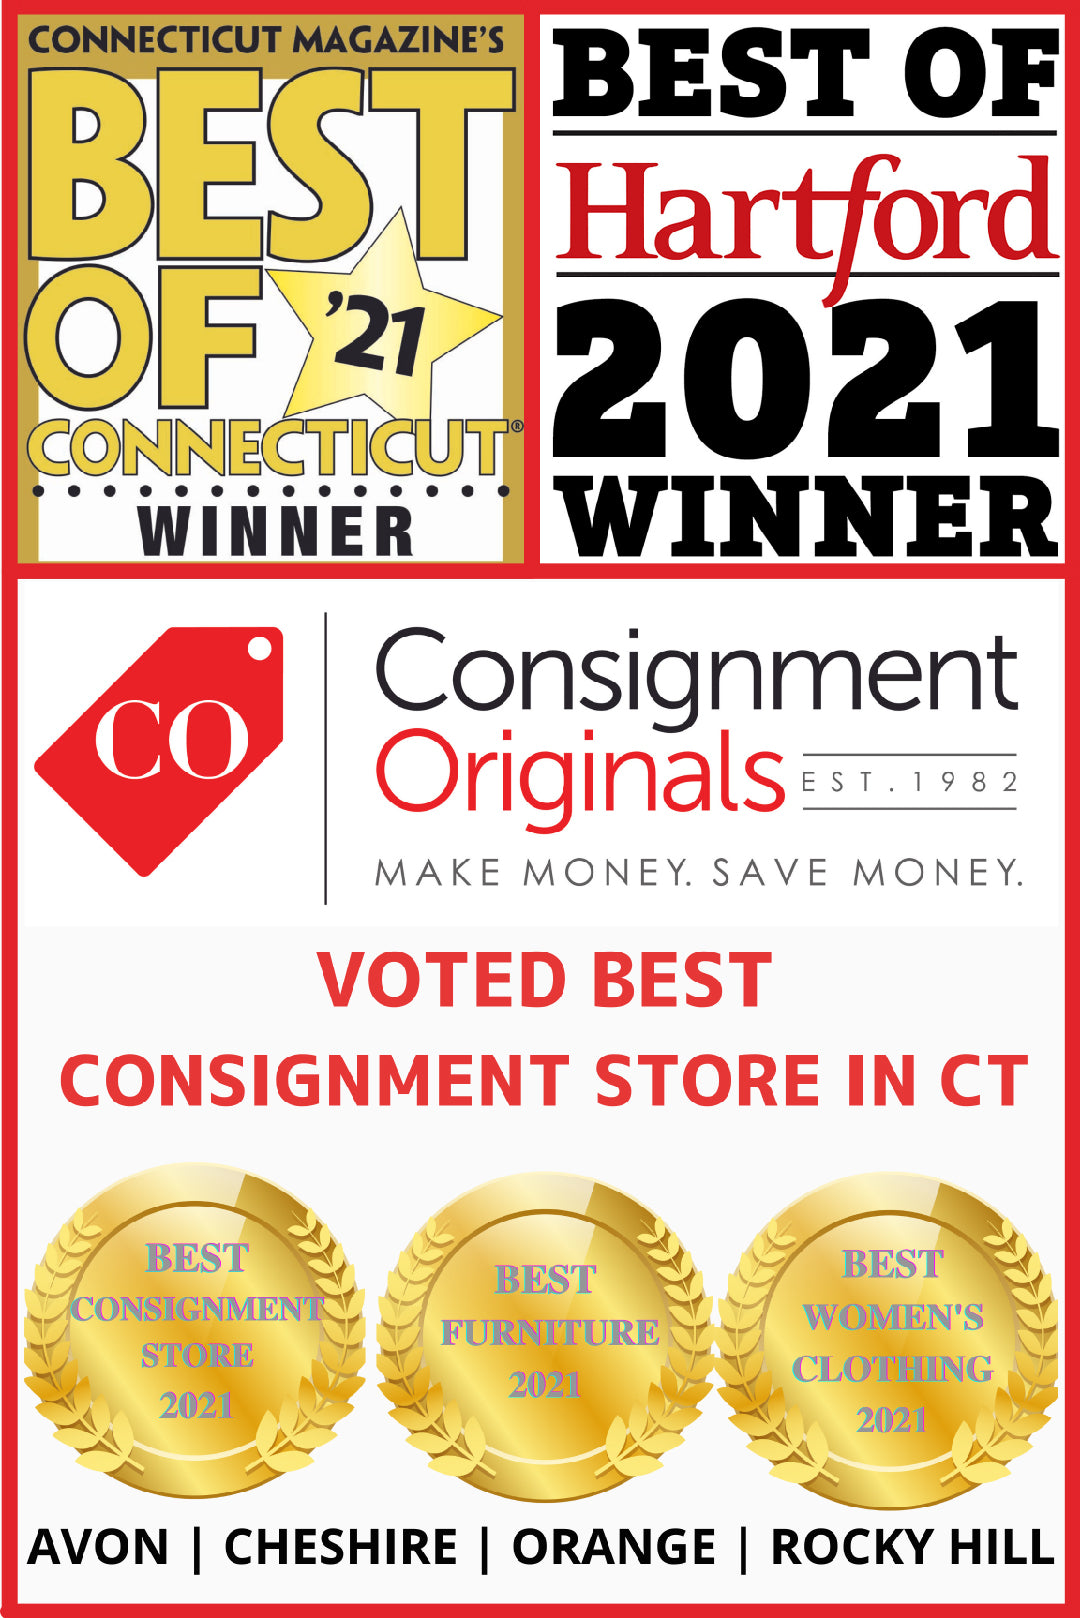 Consignment Originals Best of Hartford 2021 Winner